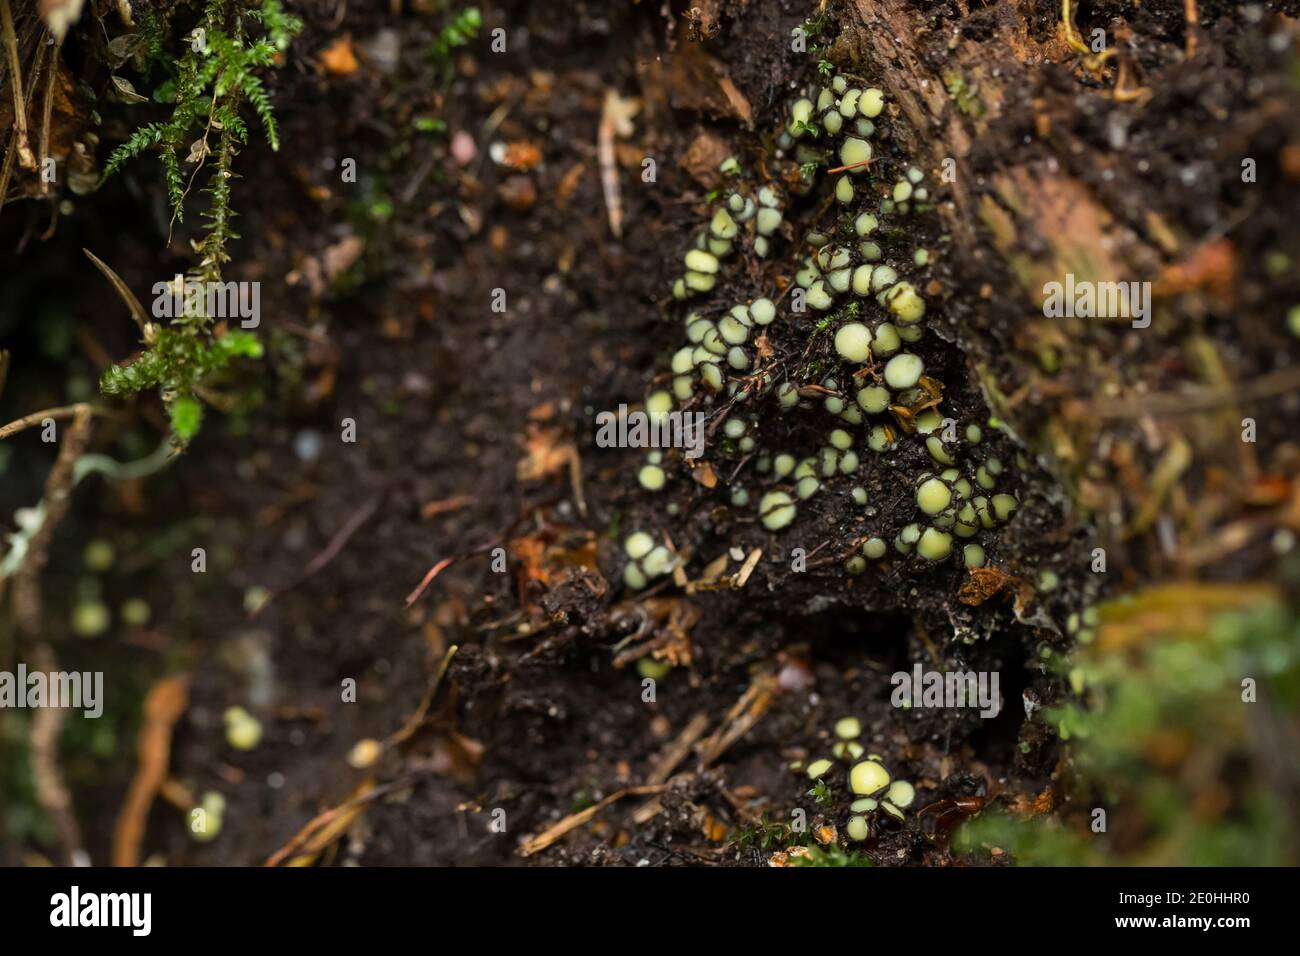 Cup fungi (Podophacidium xanthomelum) on a forest stream bank Stock Photo